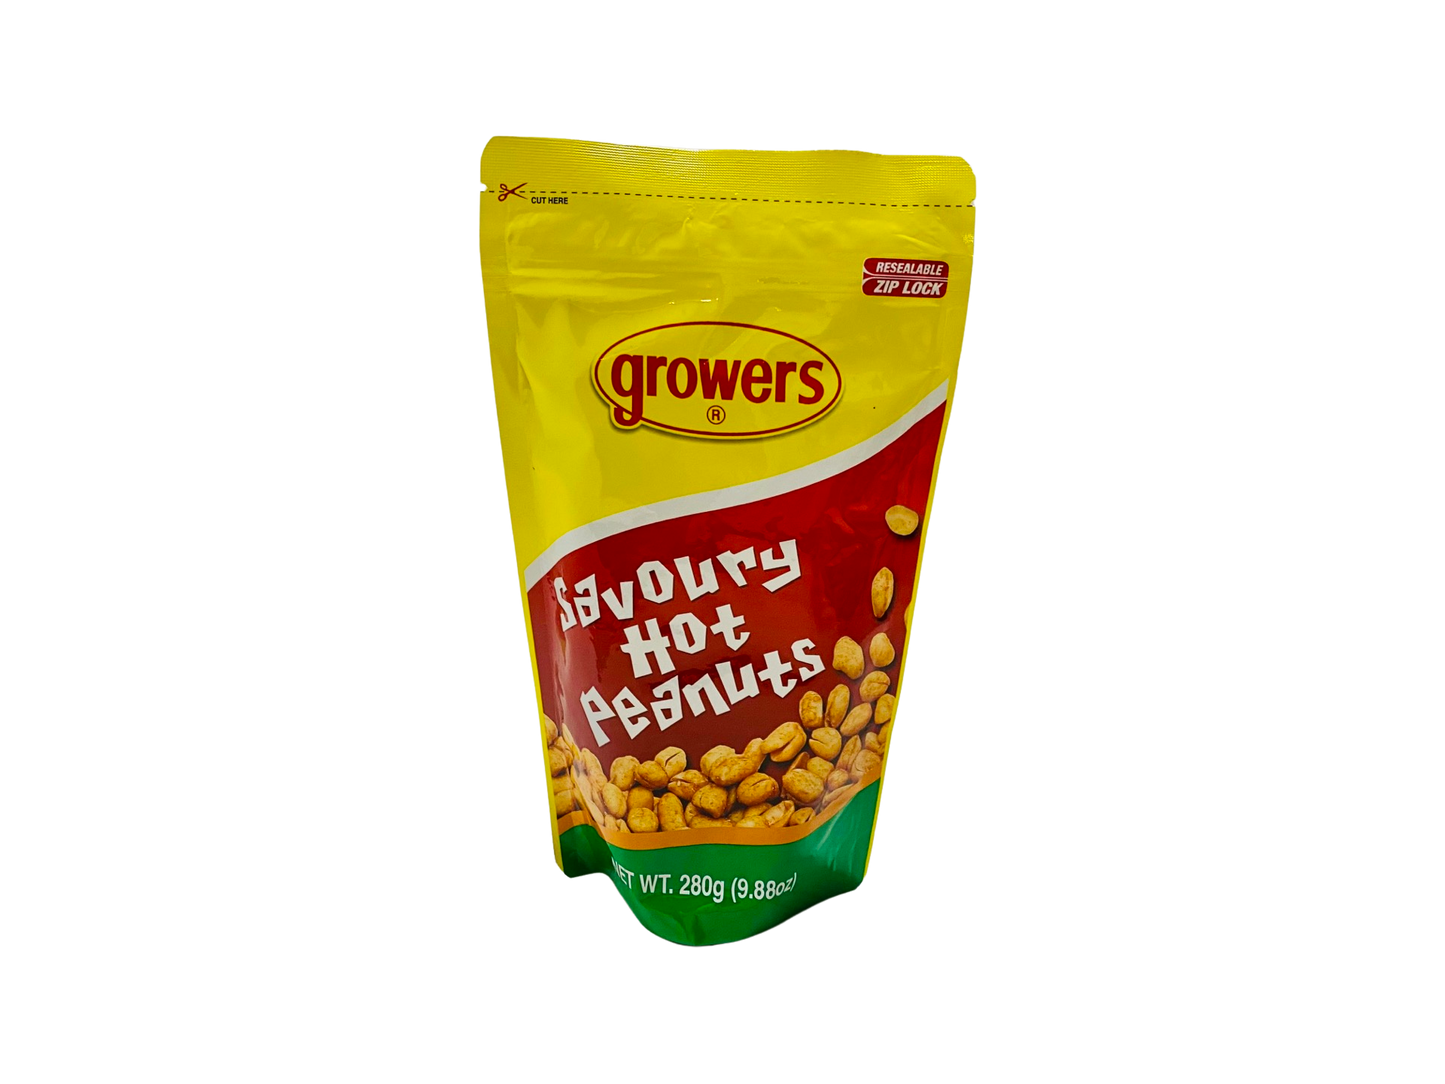 Growers Savory Hot Peanuts 280g